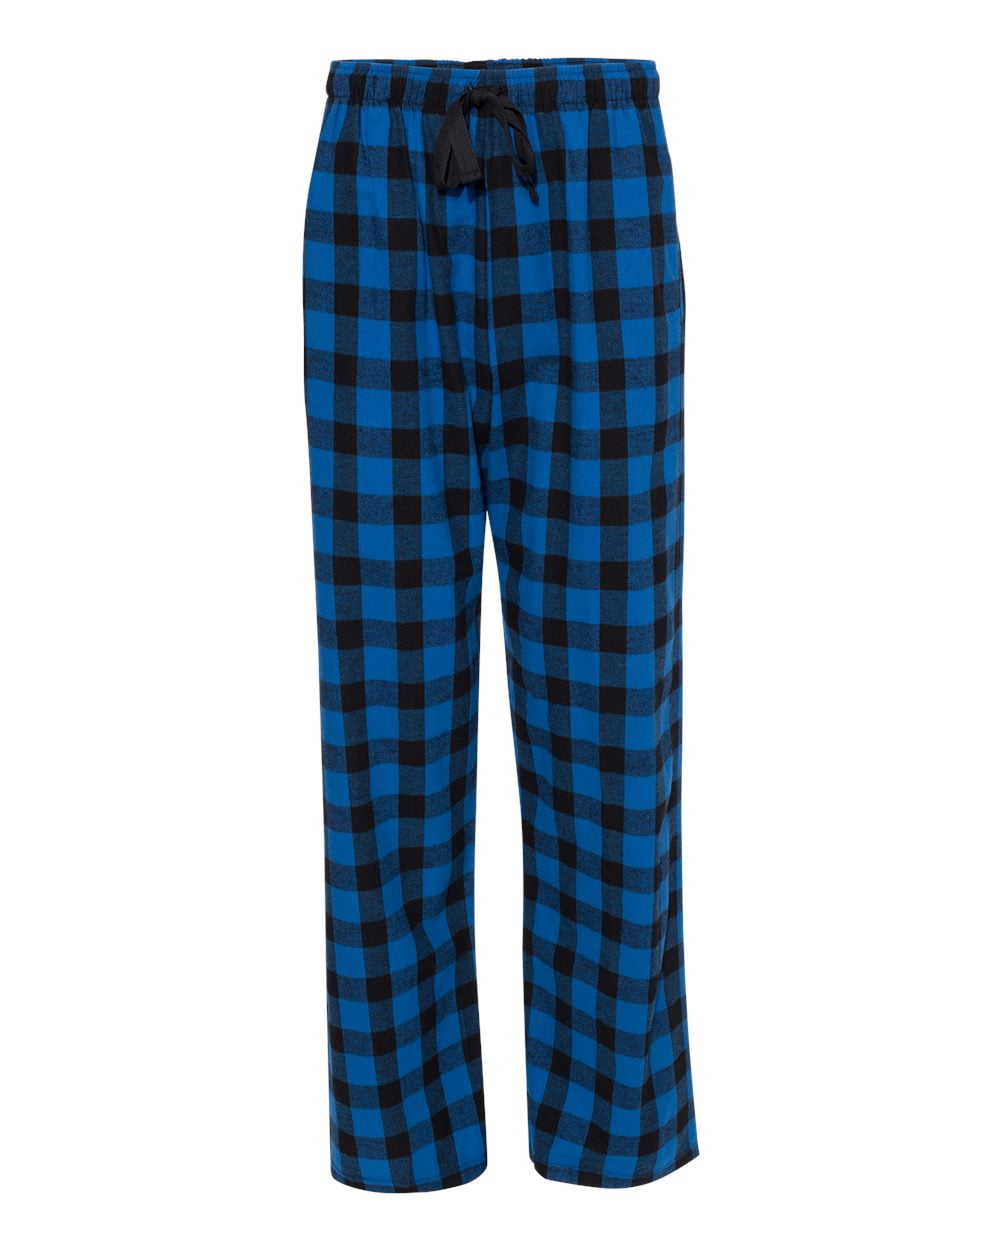 Boxercraft - New IWPF - Men - Flannel Pants With Pockets - Walmart.com